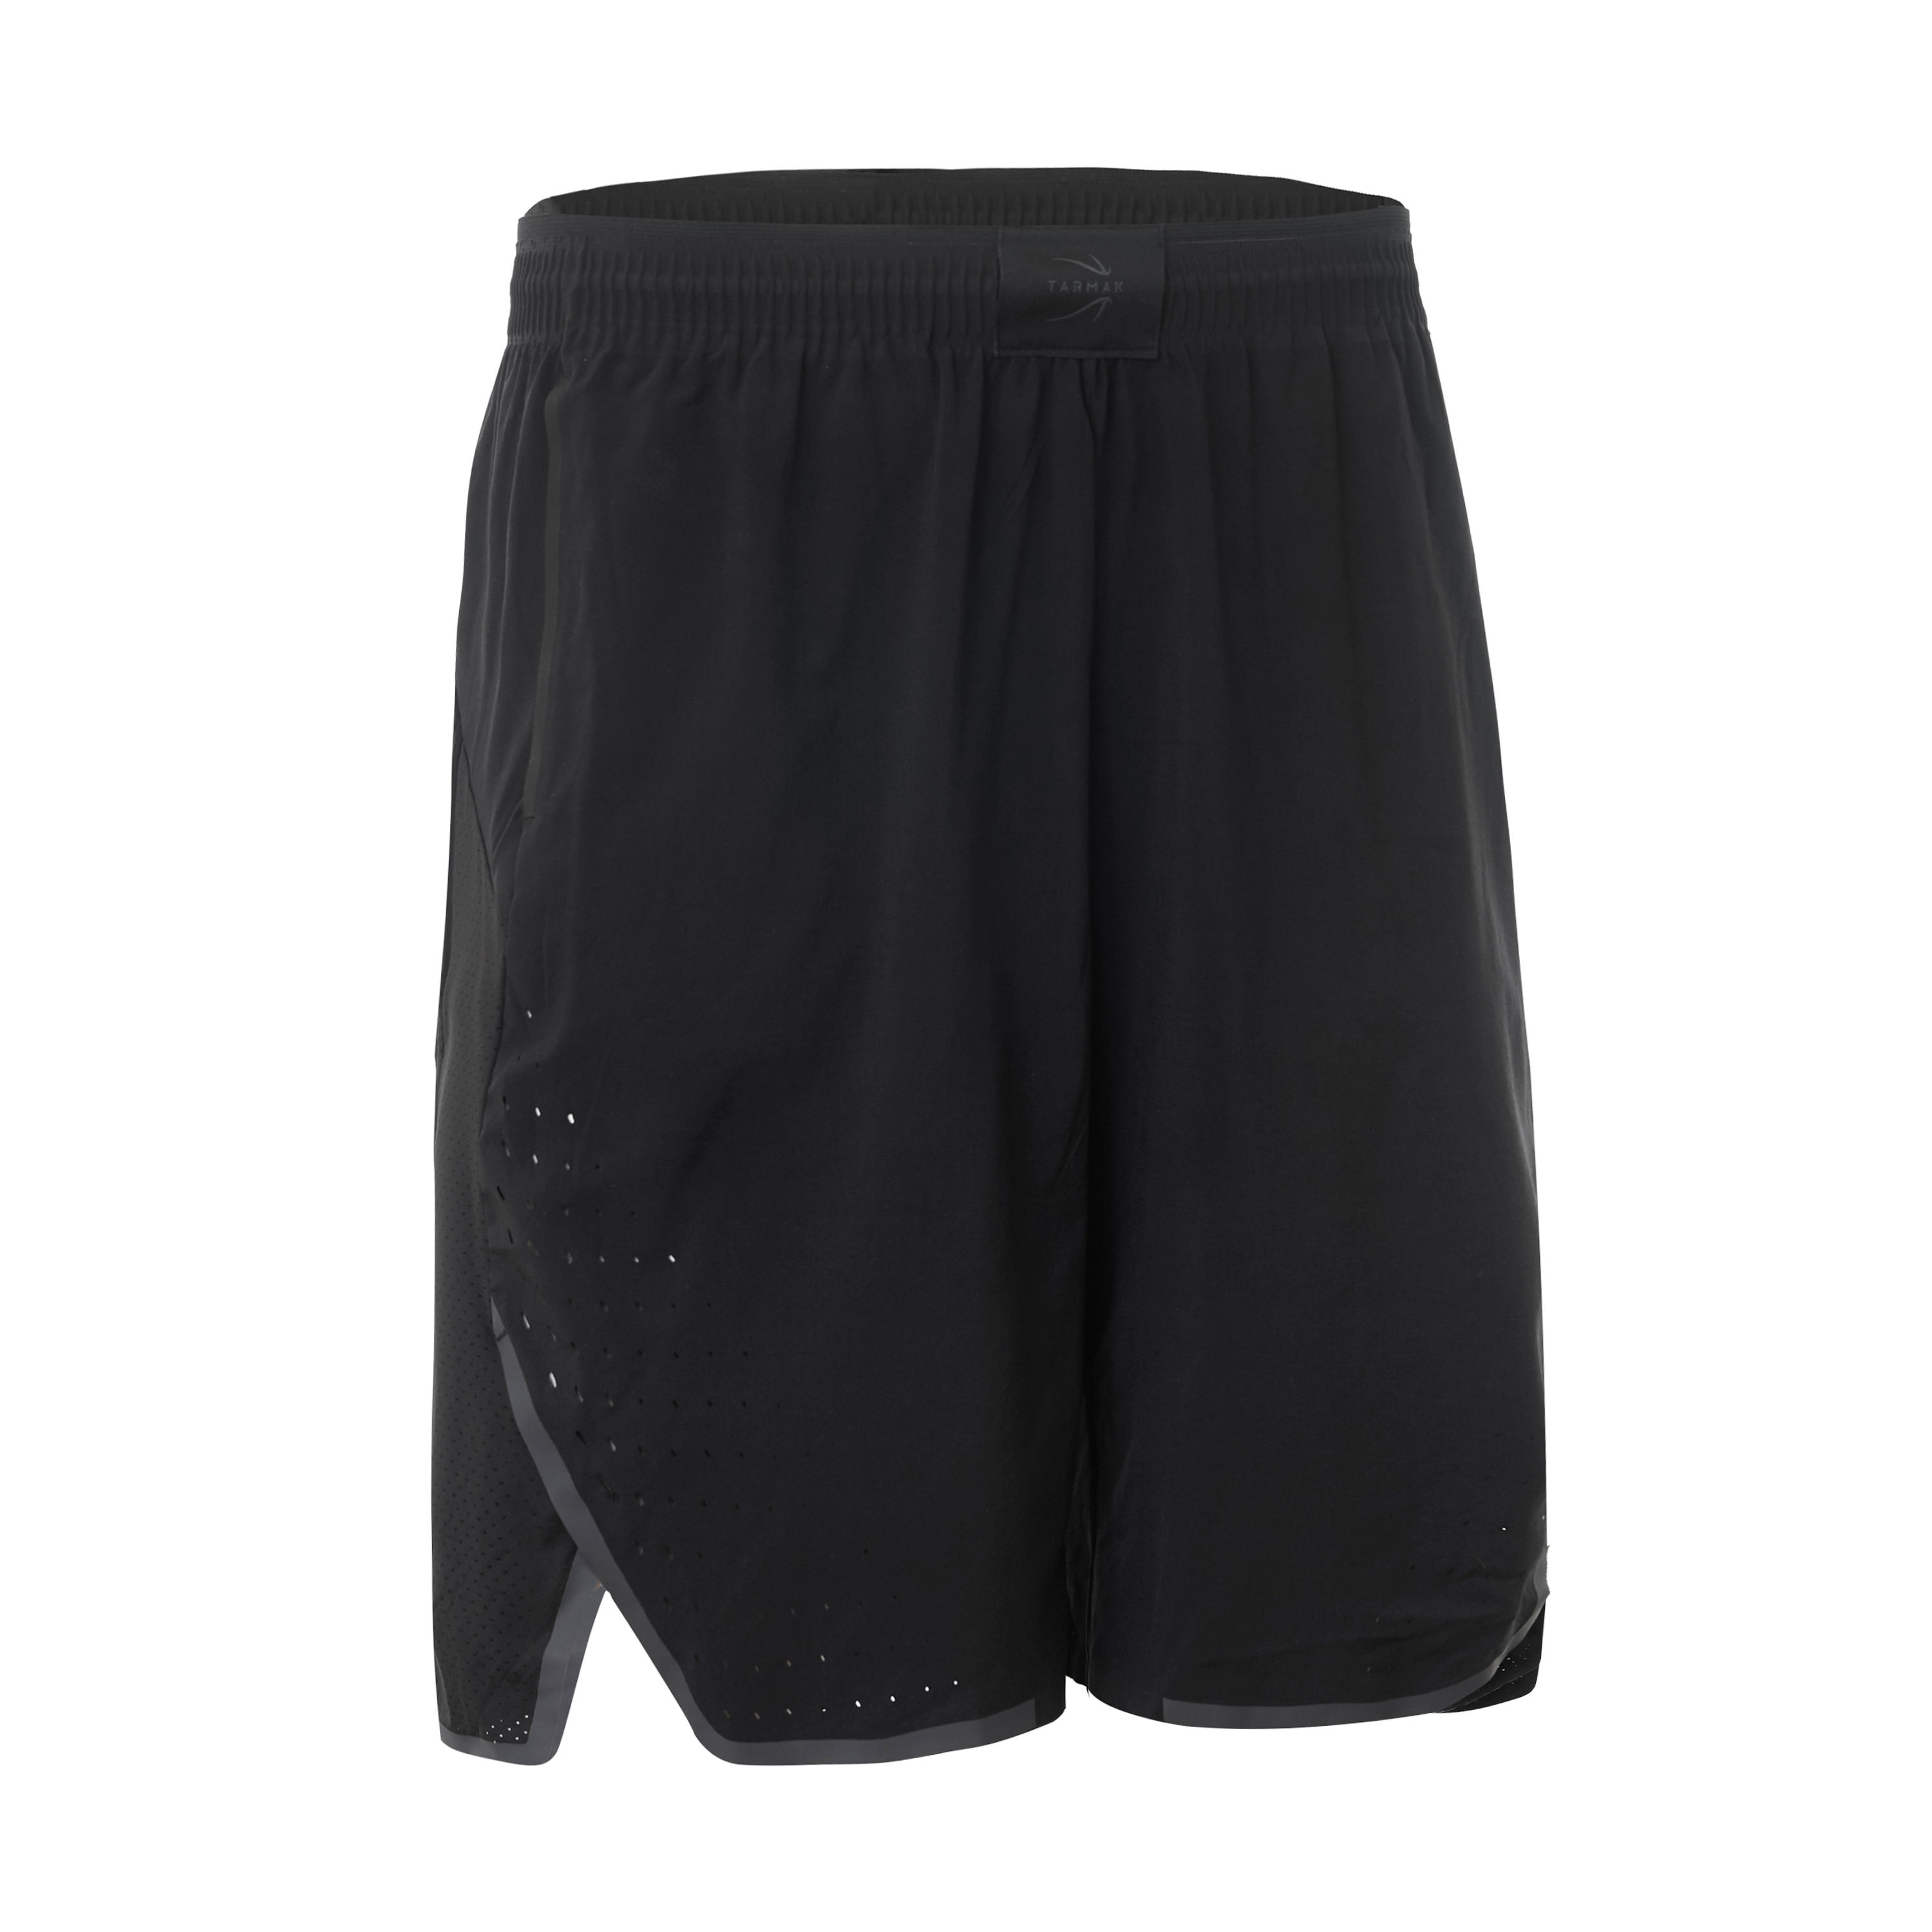 basketball black shorts